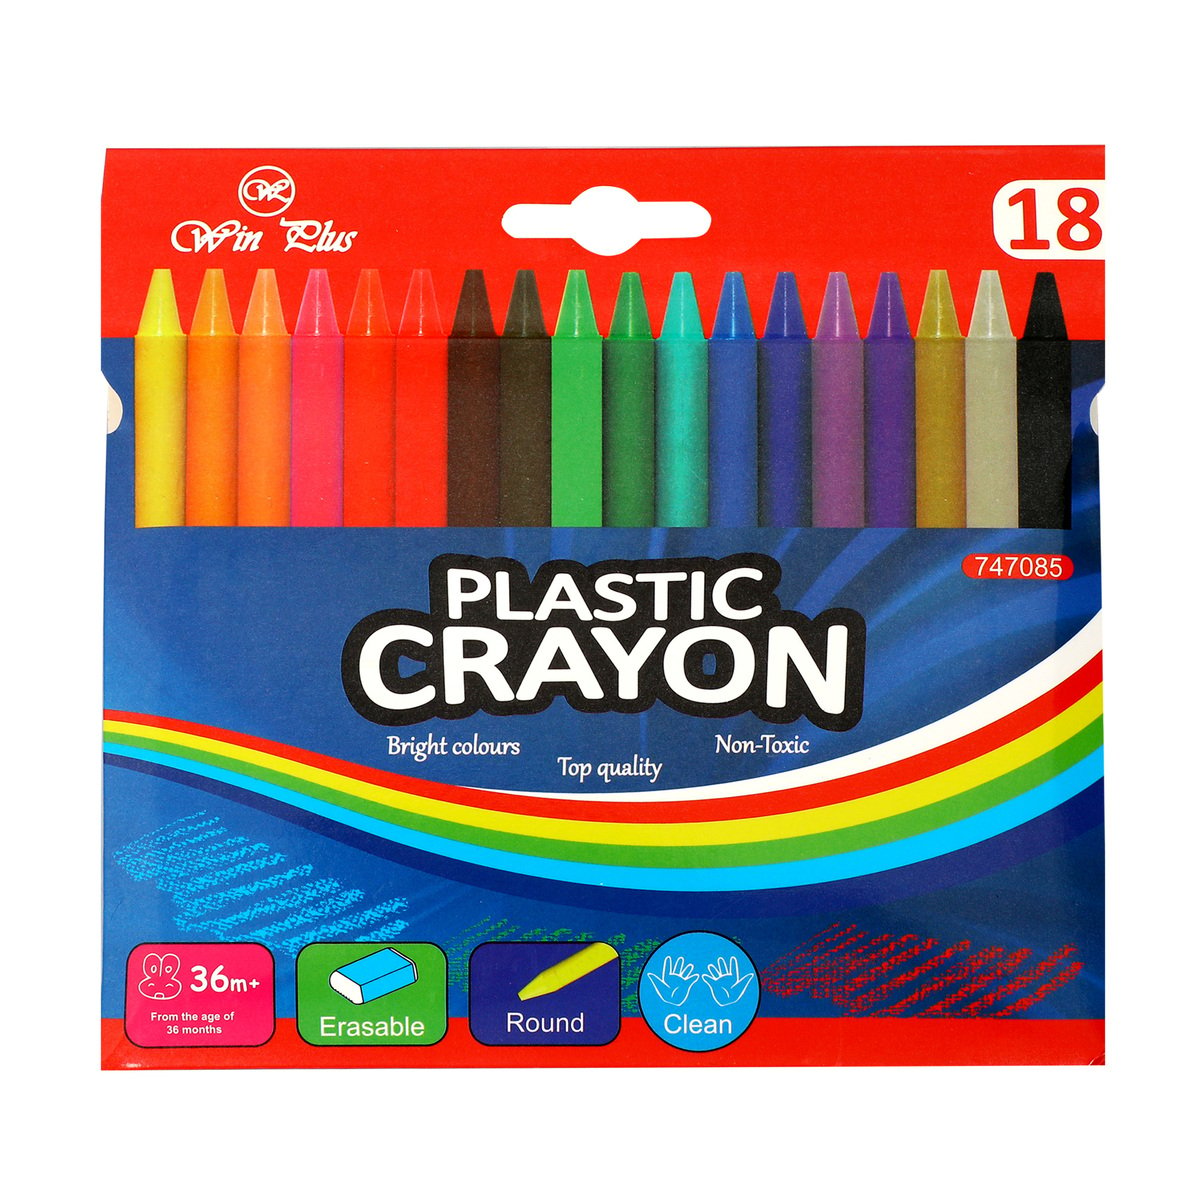 Win Plus Plastic Crayons 747085 18Pcs